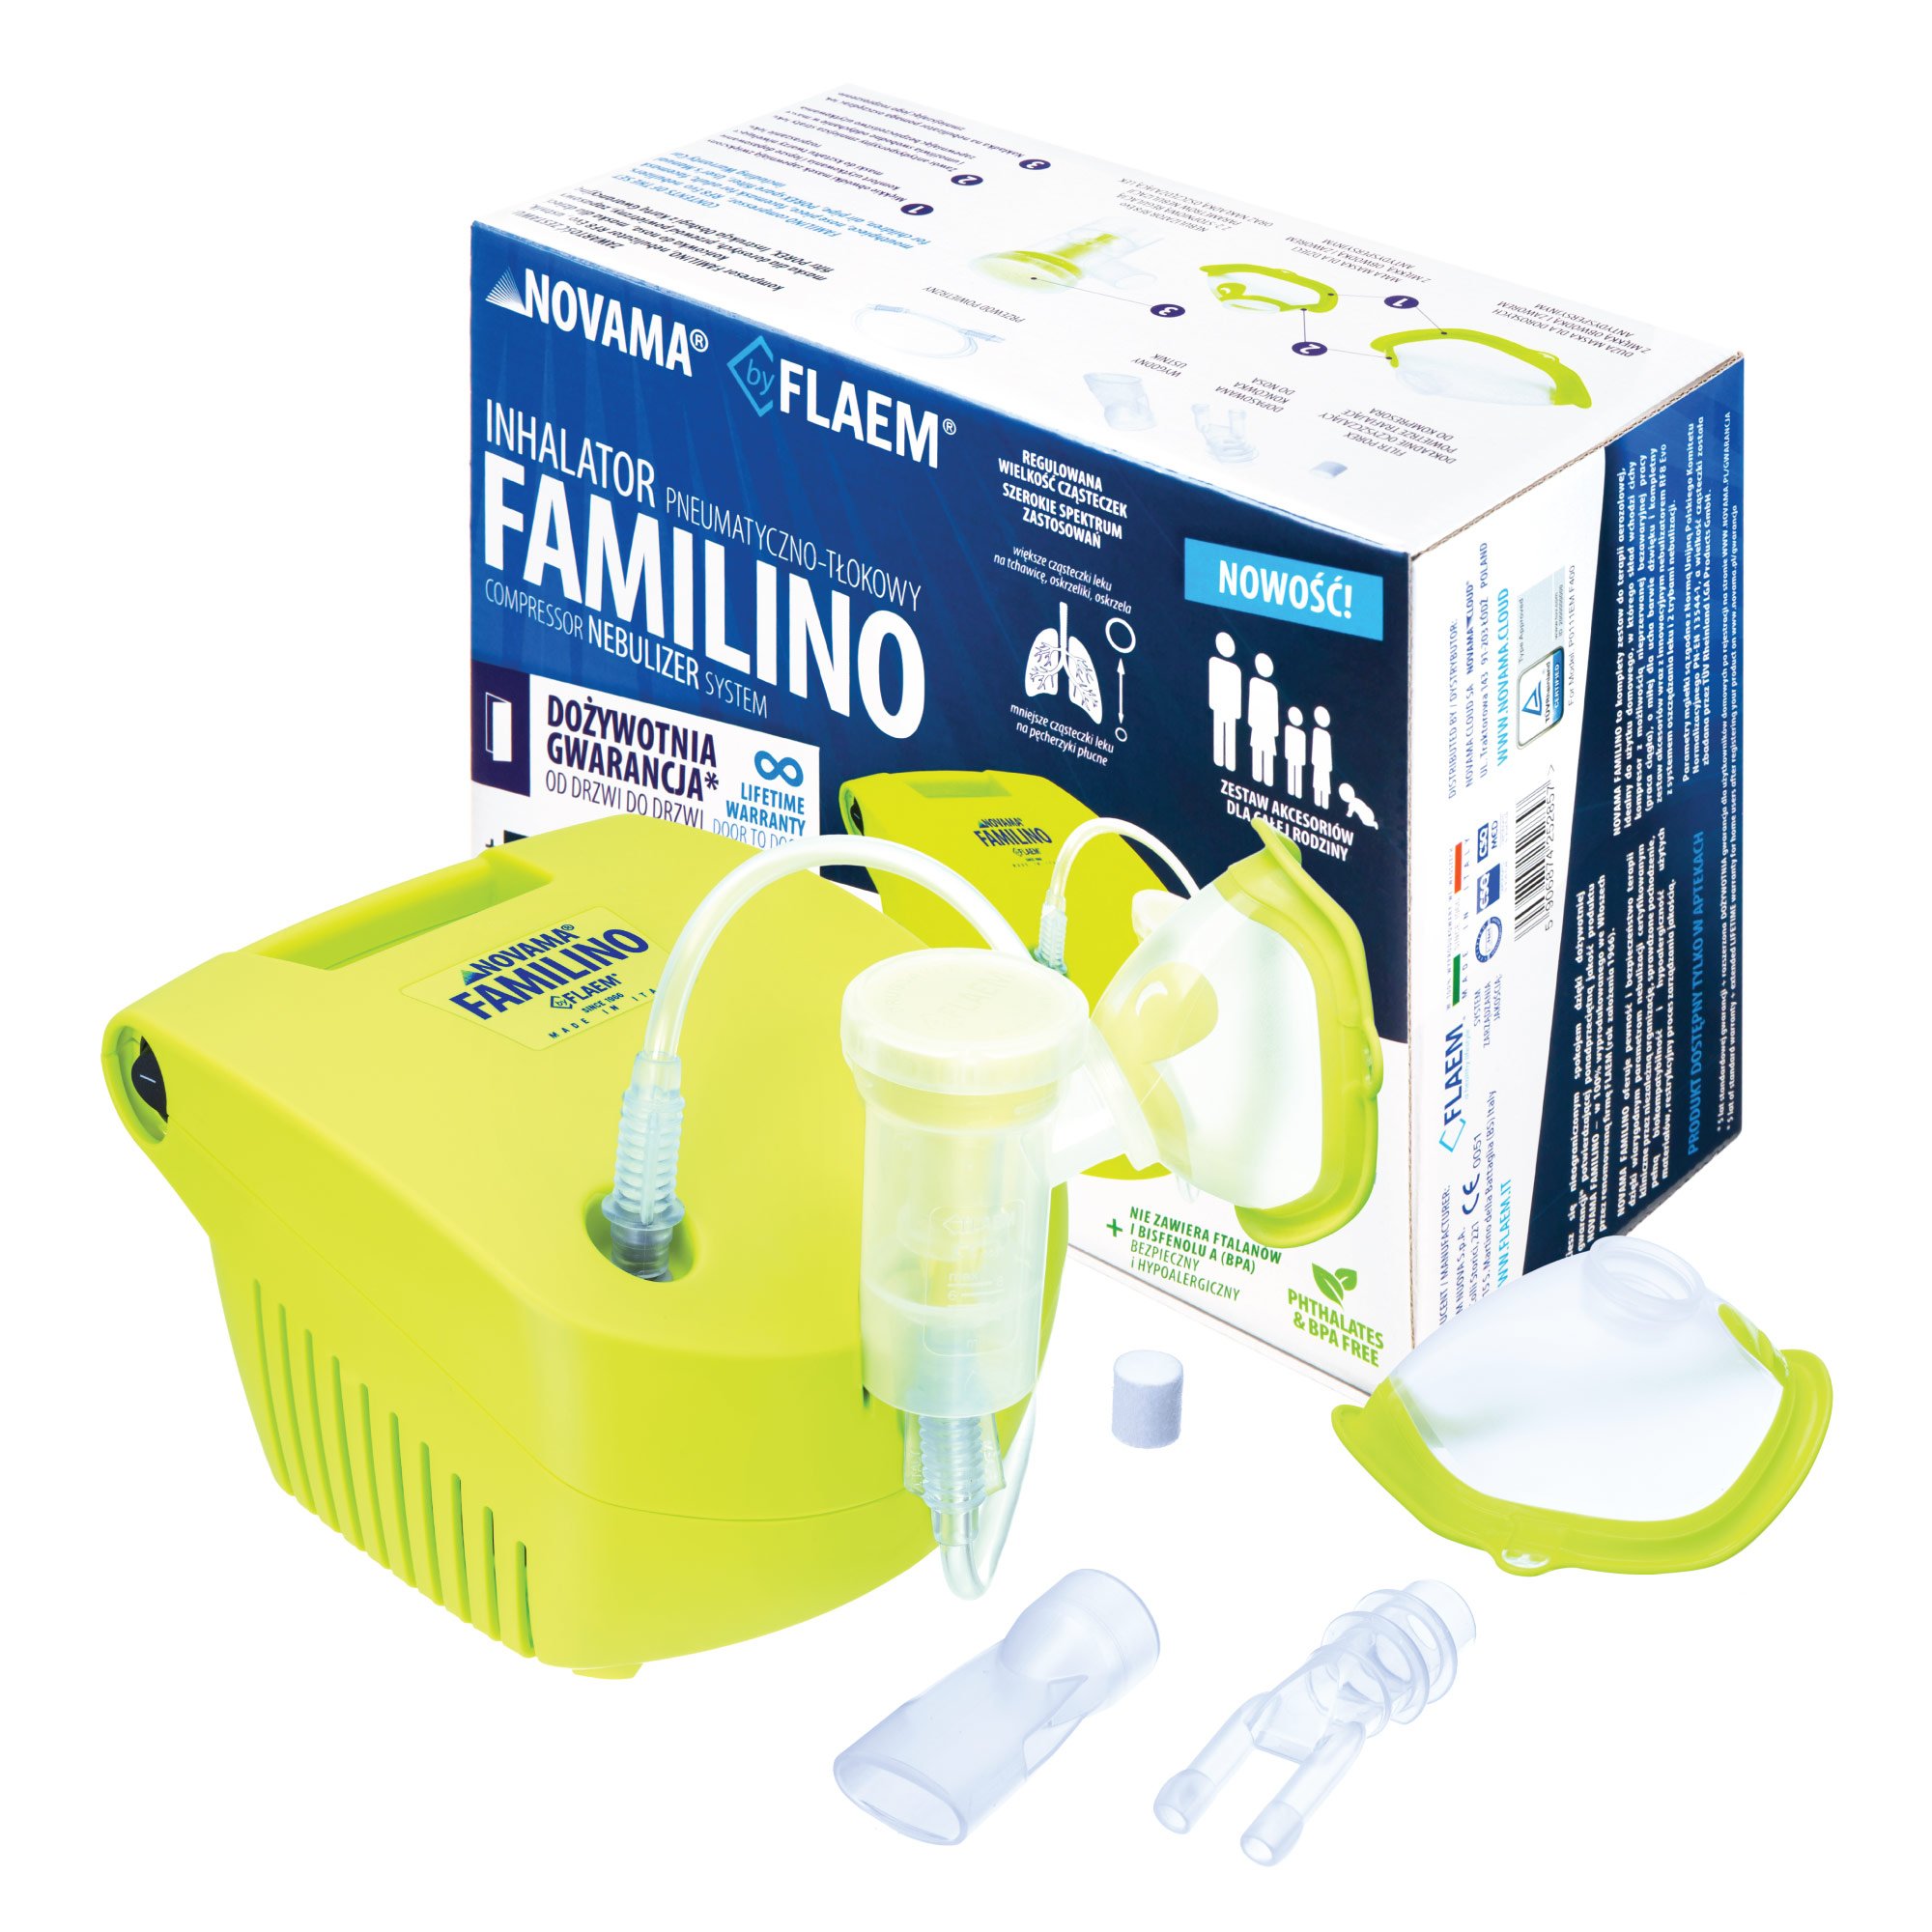 Novama Familino by Flaem inhalator TOW009850